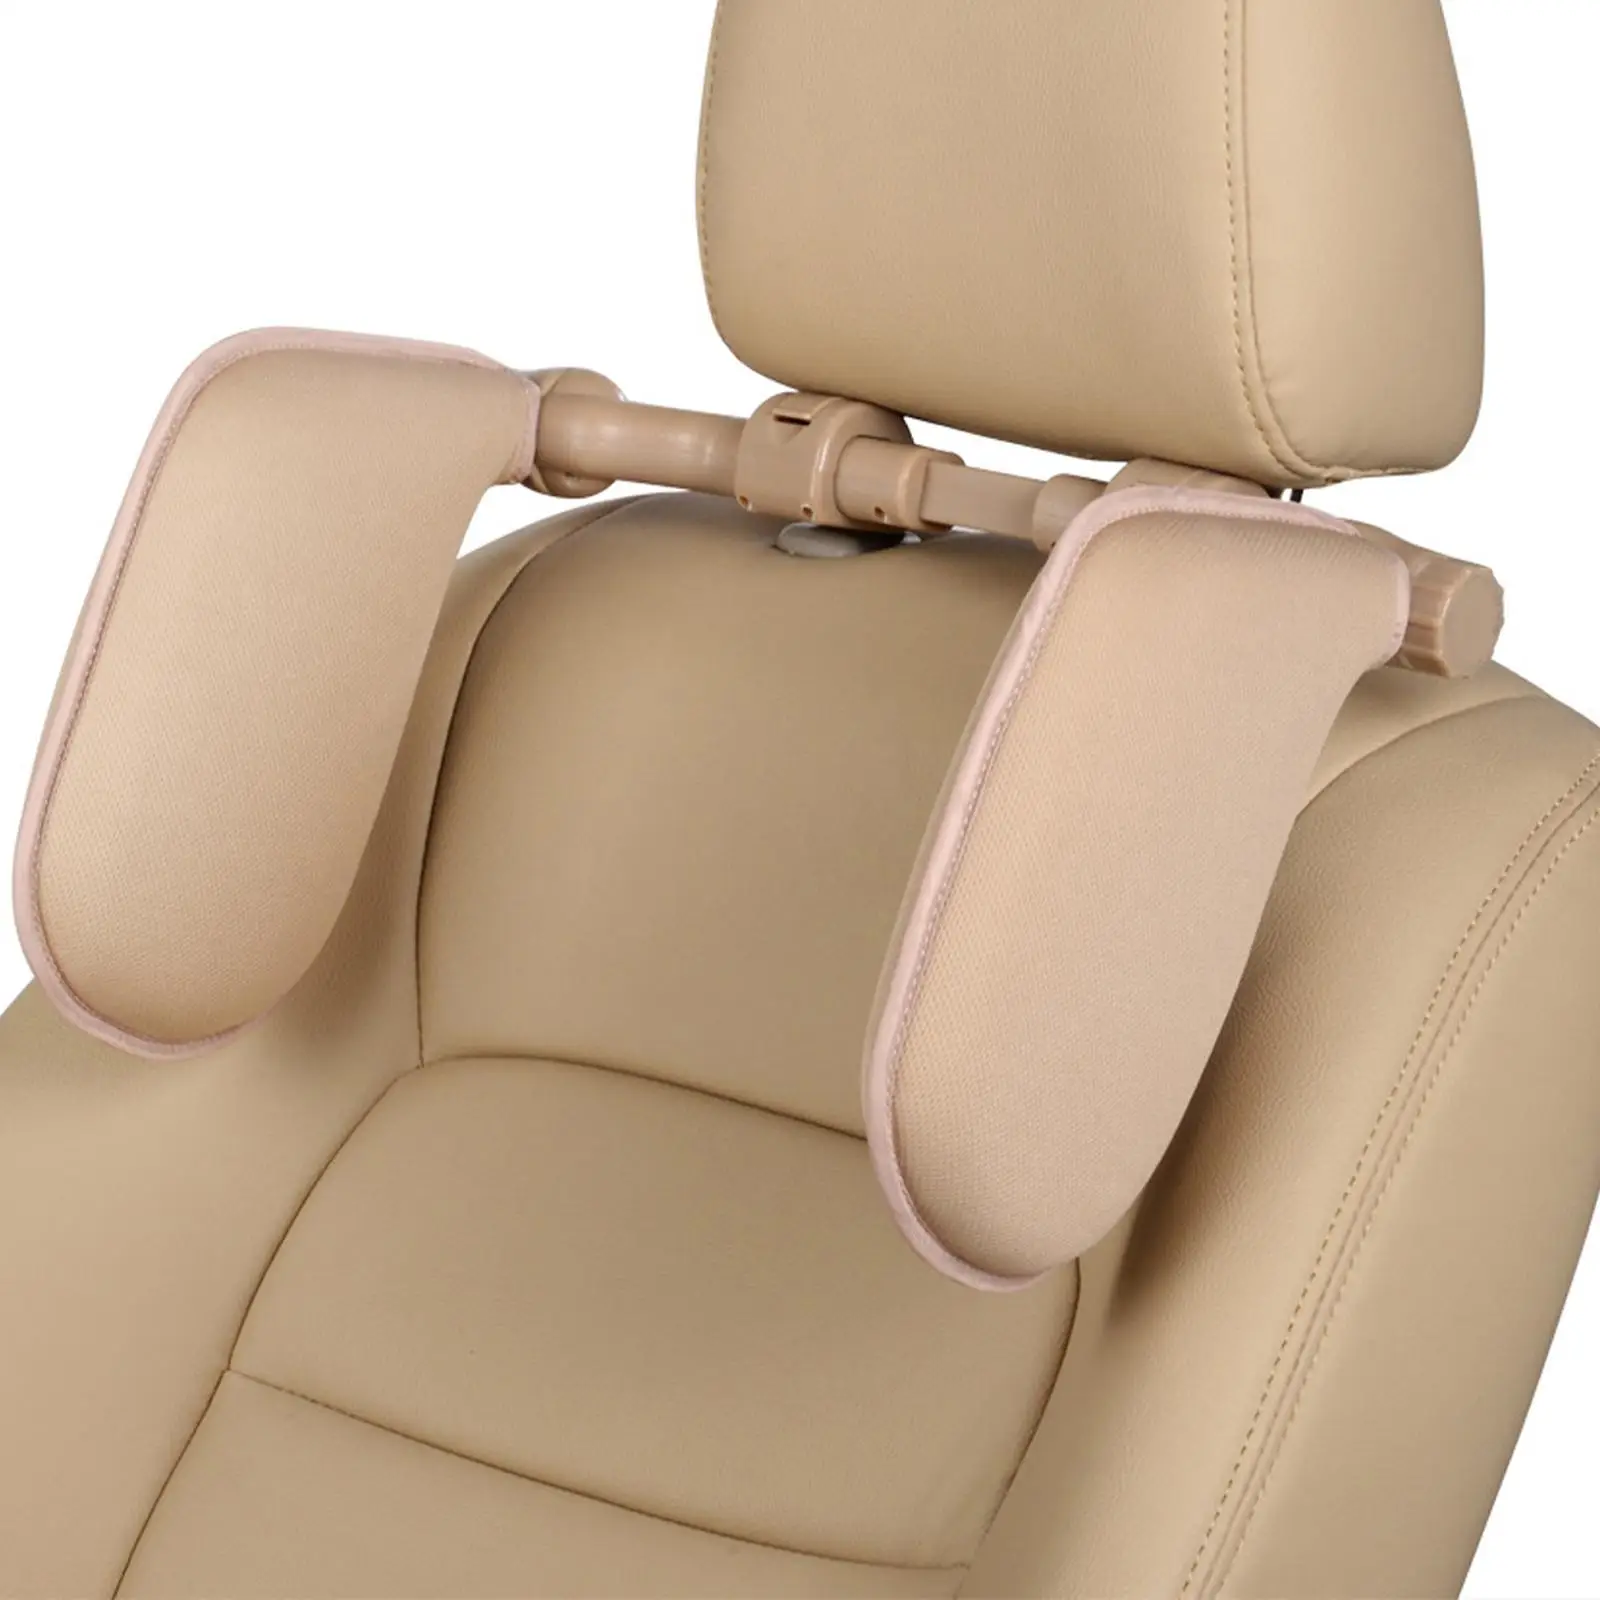 U Shaped Car Neck Headrest  Adjustable Support Soft Sleep Cushion for Adults Child Breathable Fabric Head Restraint